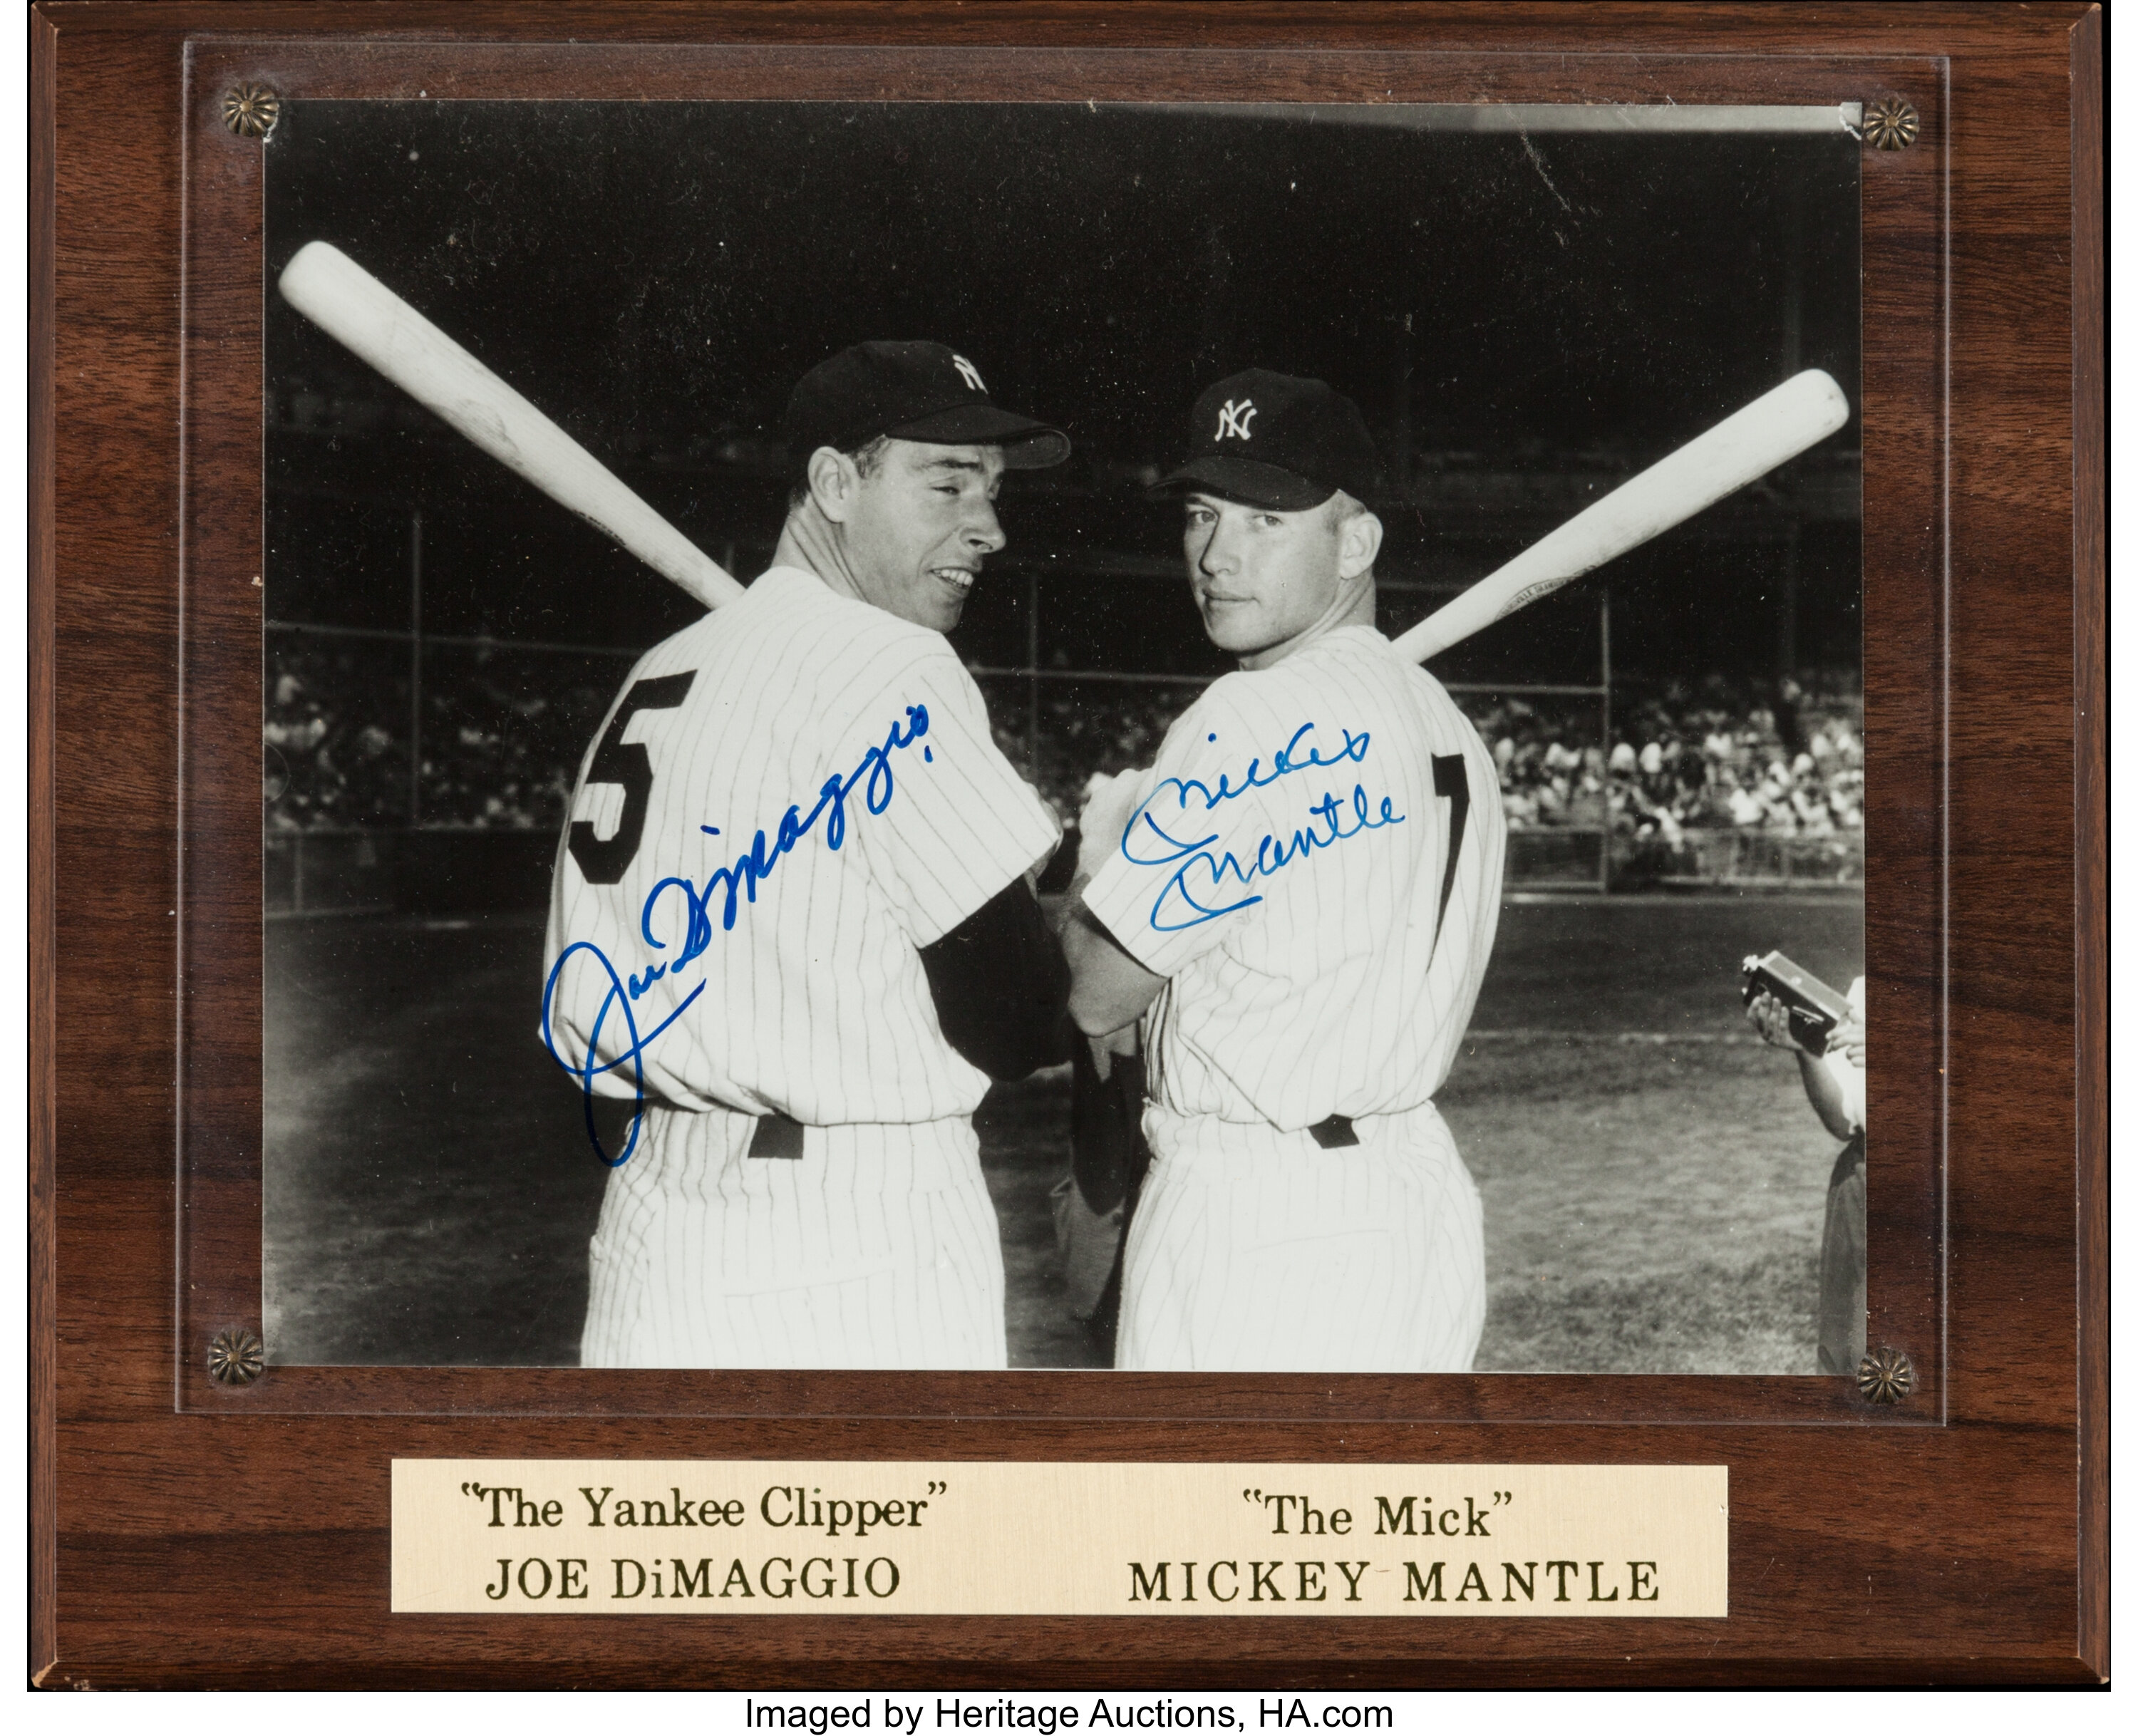 Joe DiMaggio Game Used Bat Souvenir - Joe DiMaggio and Mickey Mantle Game  Used Collection Bat Souvenir - Rafael Osona Auctions Nantucket, MA